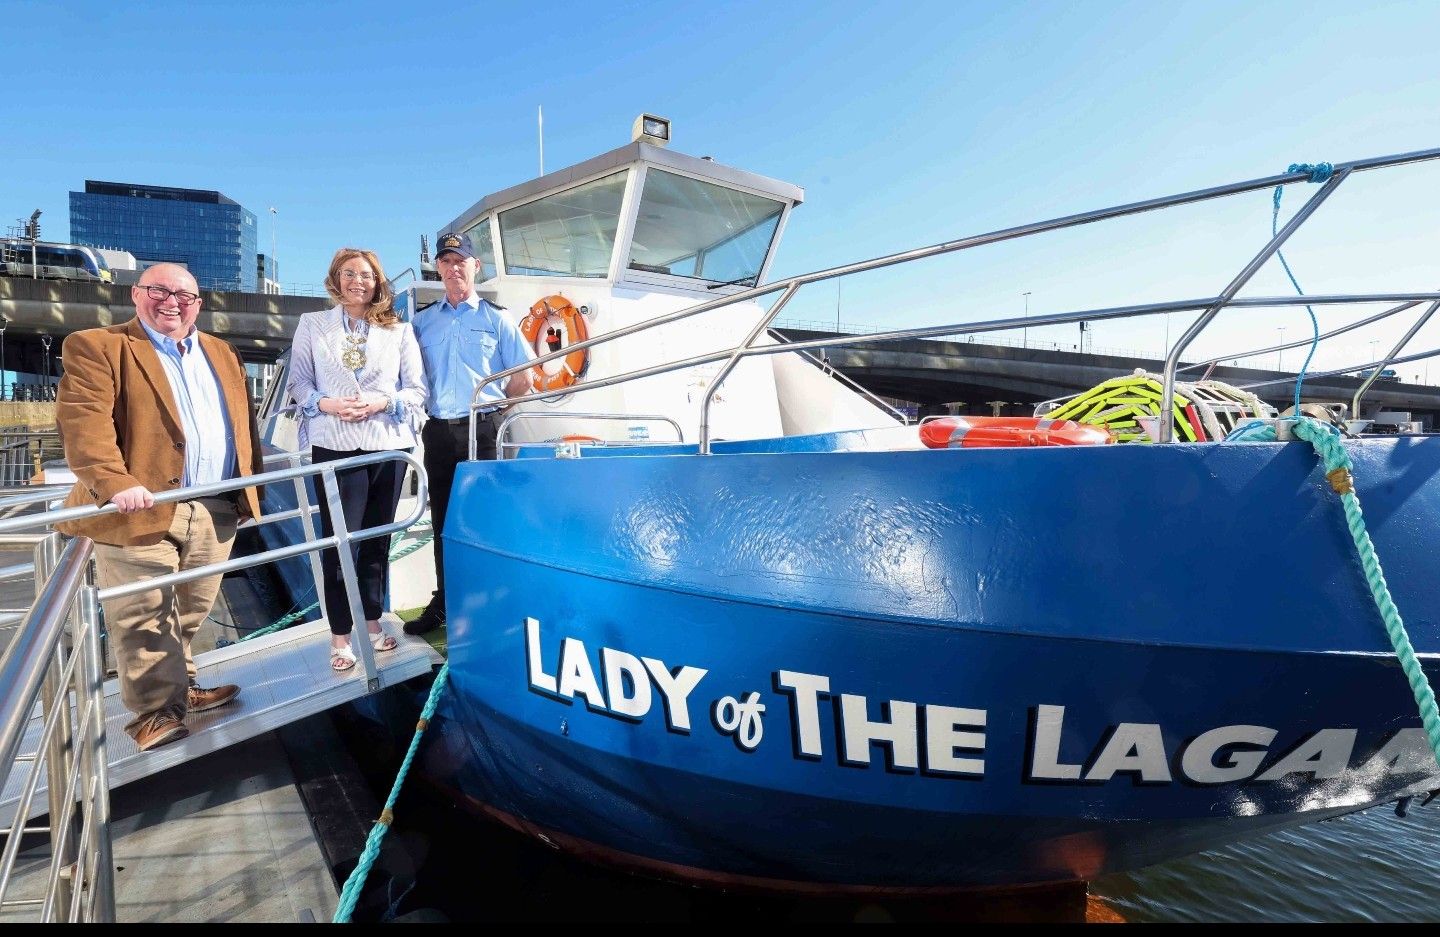 Whiskey entrepreneur launches MV Lady of the Lagan